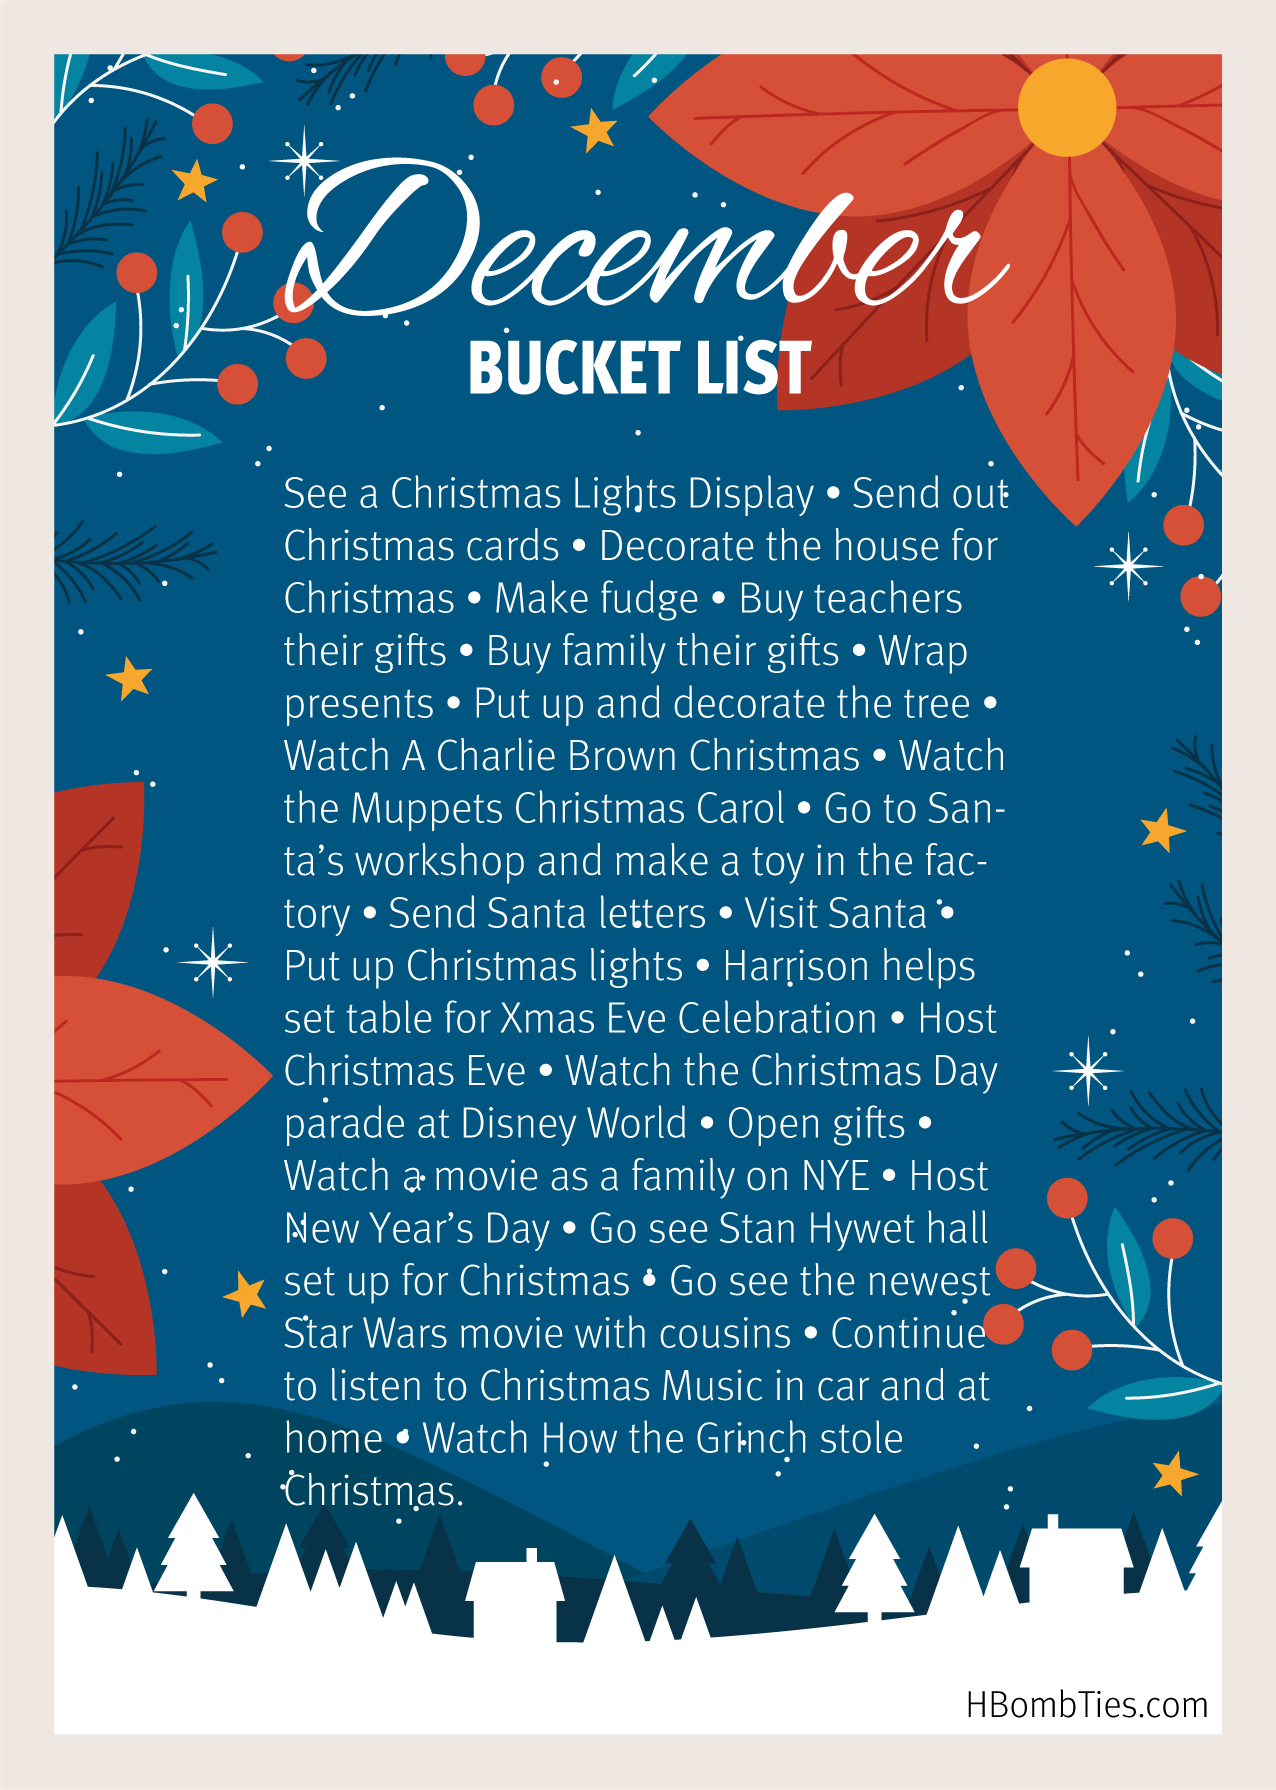 December Bucket List